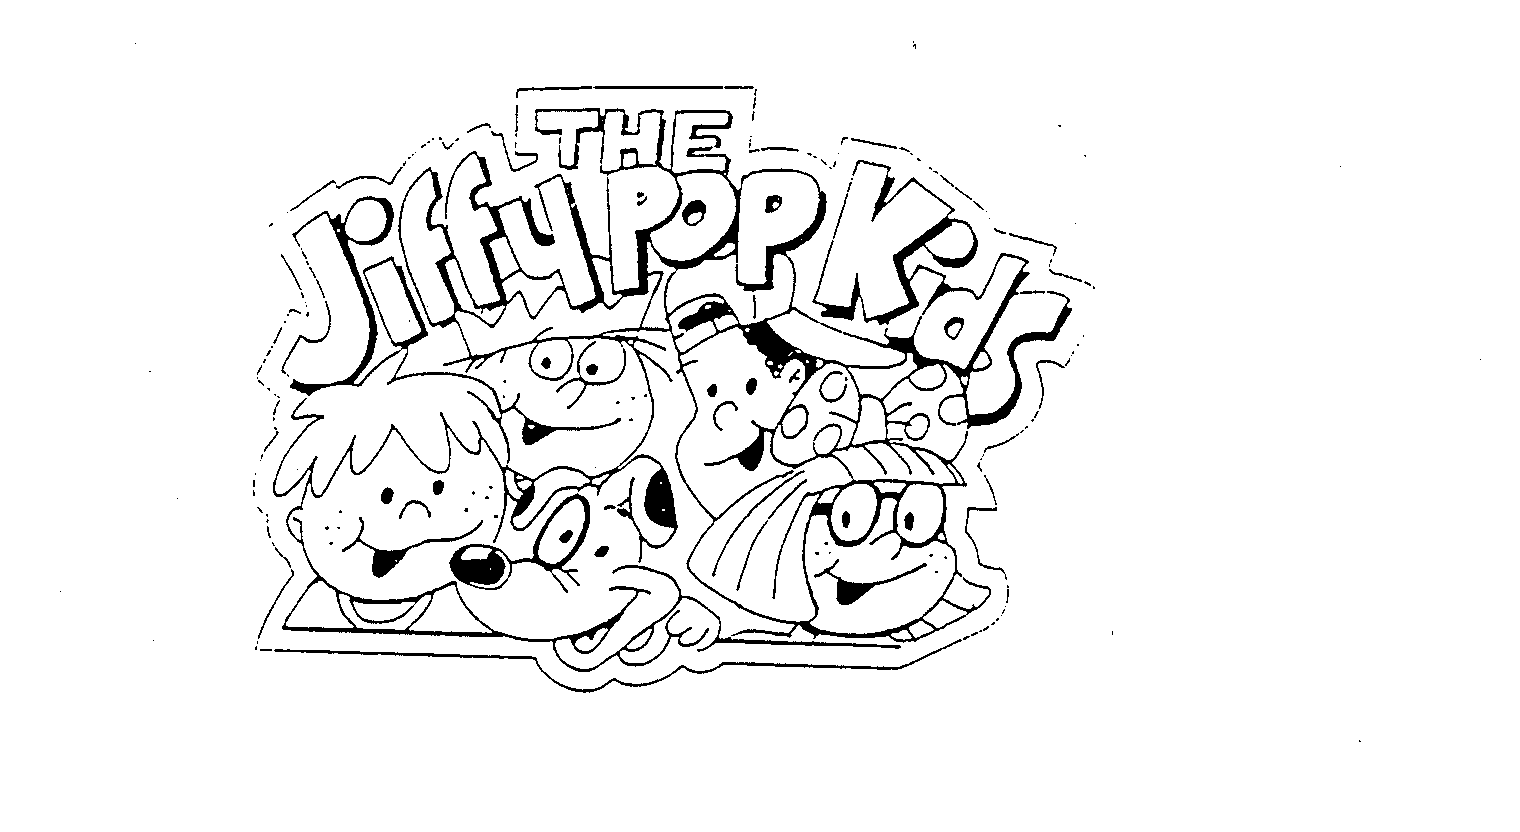  THE JIFFY POP KIDS